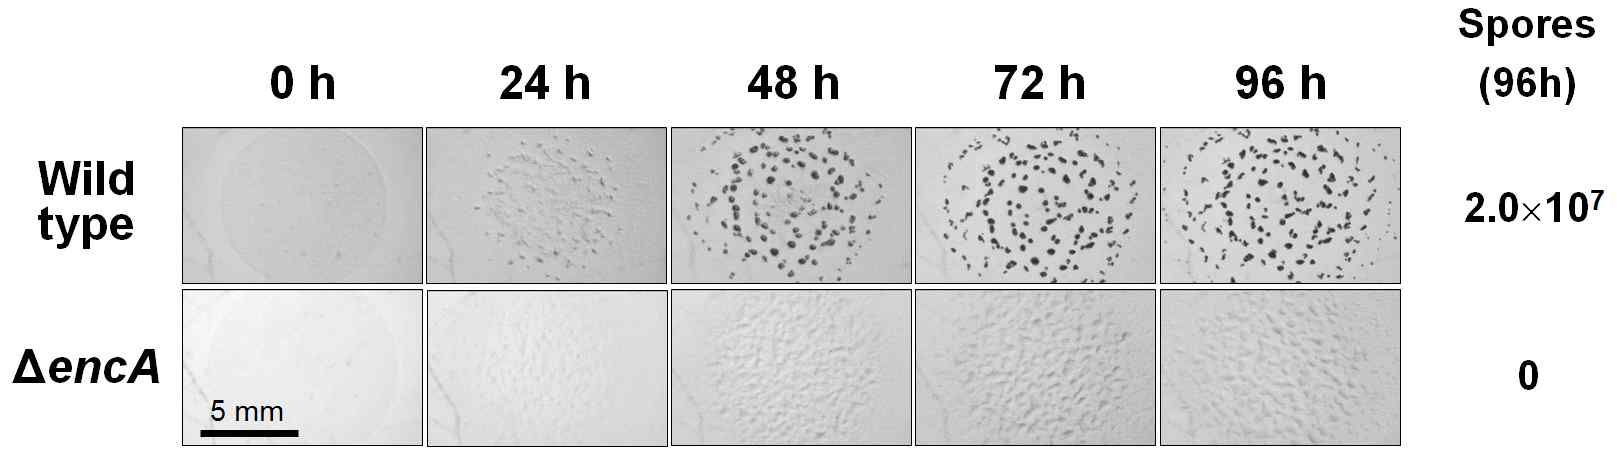 encA 유전자 삭제변이에 의한 자실체 형성능 상실. 1×108 마리의 세포를 20 μl spot으로 자실체 유도배지에 올려놓고 배양하면, 시간이 지남에 따라 수십만 마리의 세포들이 모여서 사진에서 검은색 점들로 보이는 다세포 자실체를 형성하고, 개별 세포들은 자실체 내부에서 포자로 변형된다. 오른쪽 숫자는 96시간 후 20 μl spot에서 생성된 포자들의 숫자이다[Kim et al., 2009]